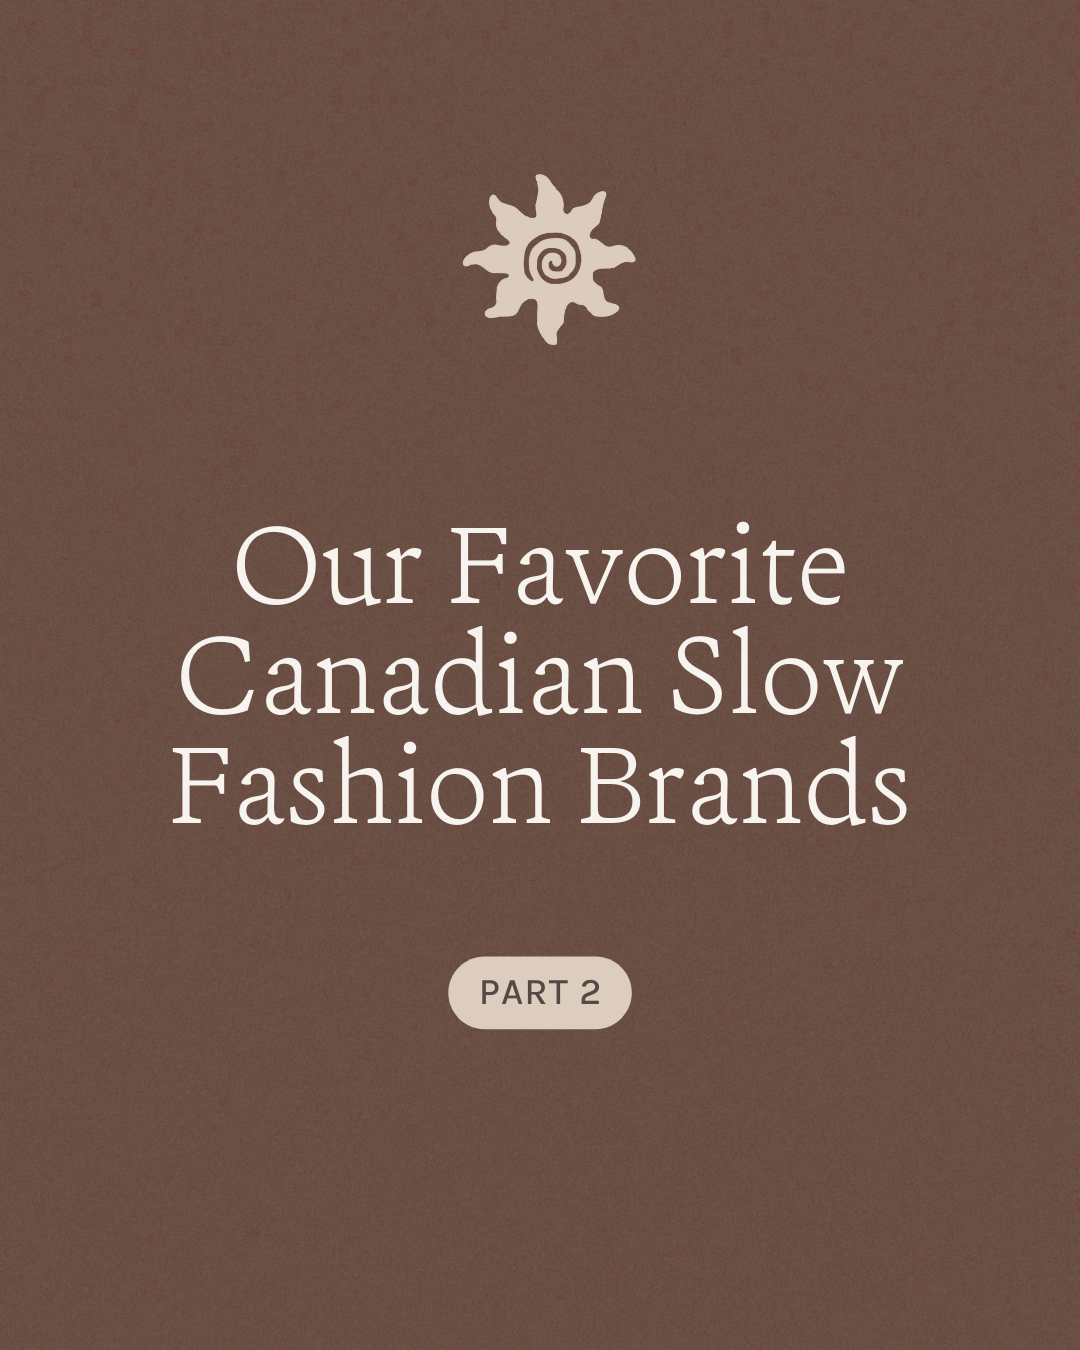 Our favorite Canadian Slow Fashion Brands PART 2